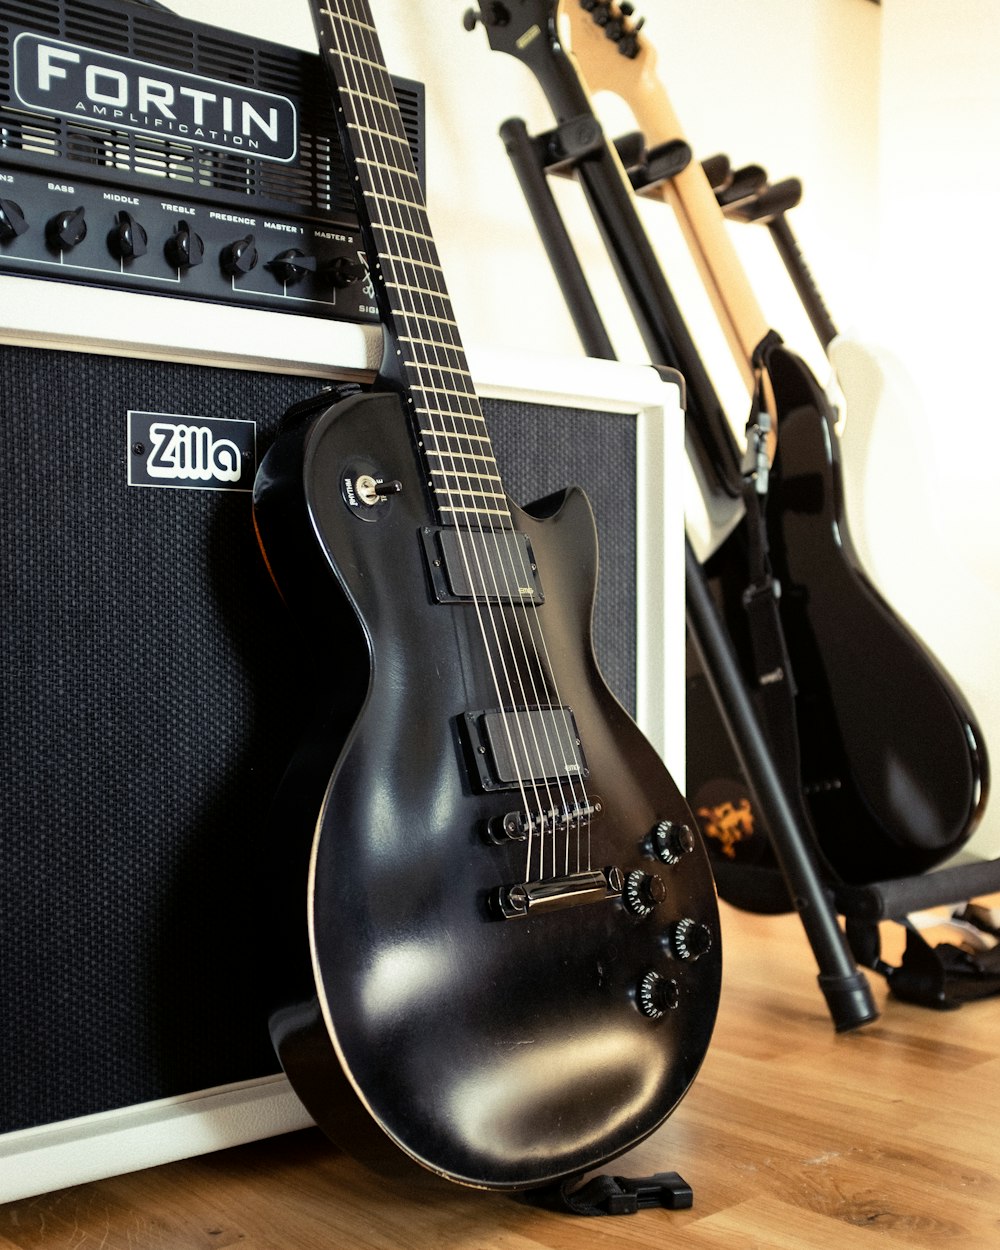 black electric guitar beside black guitar amplifier